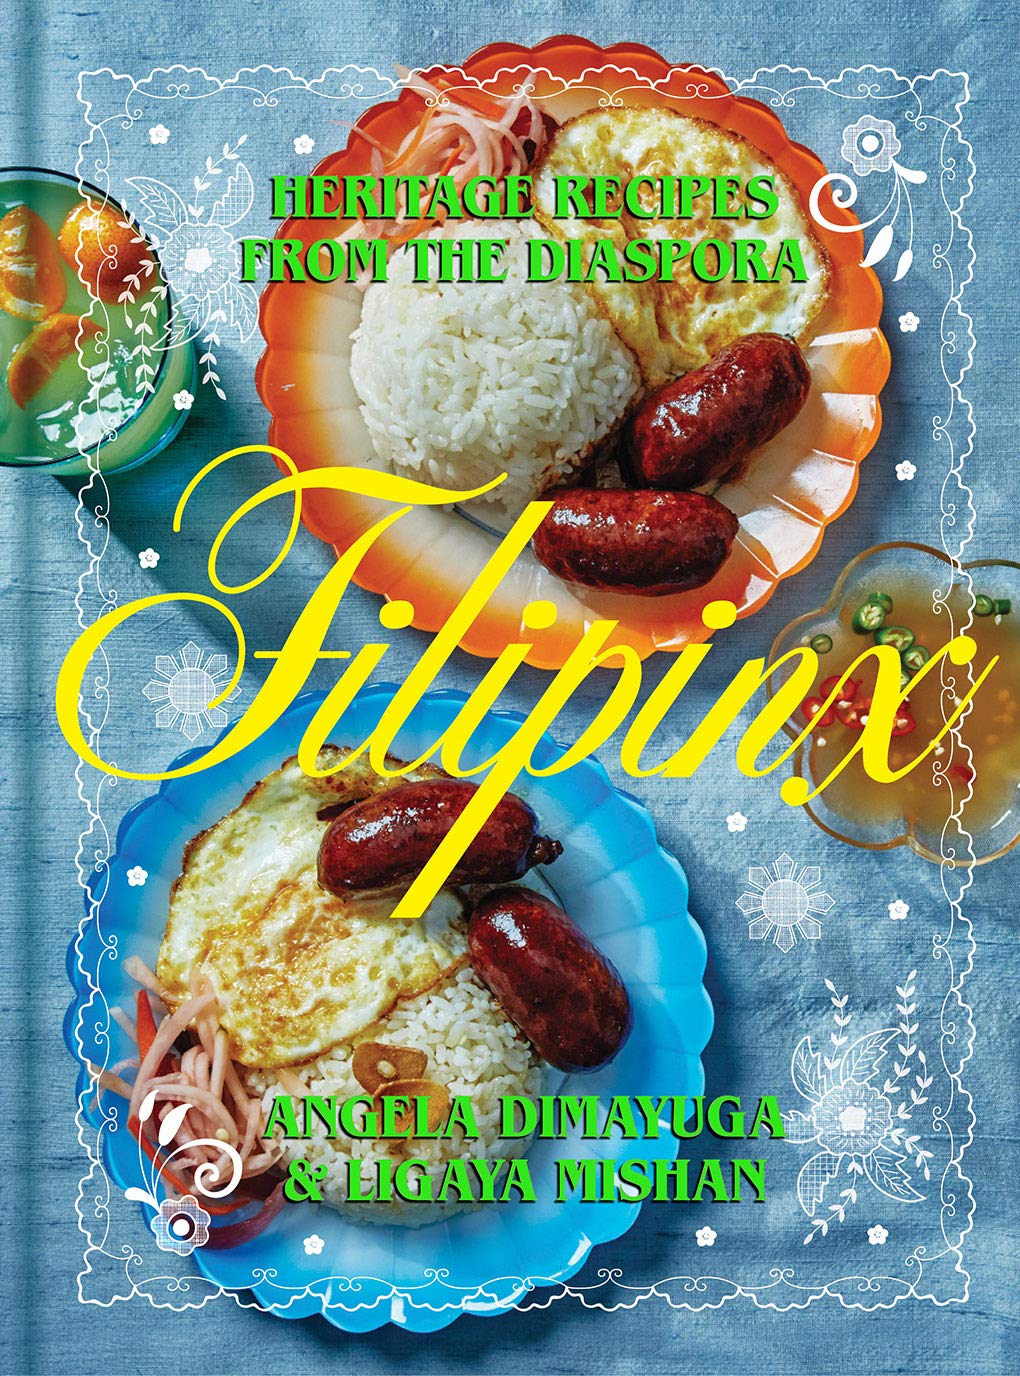 Filipinx: Heritage Recipes from the Diaspora (Angela Dimayuga, Ligaya Mishan)